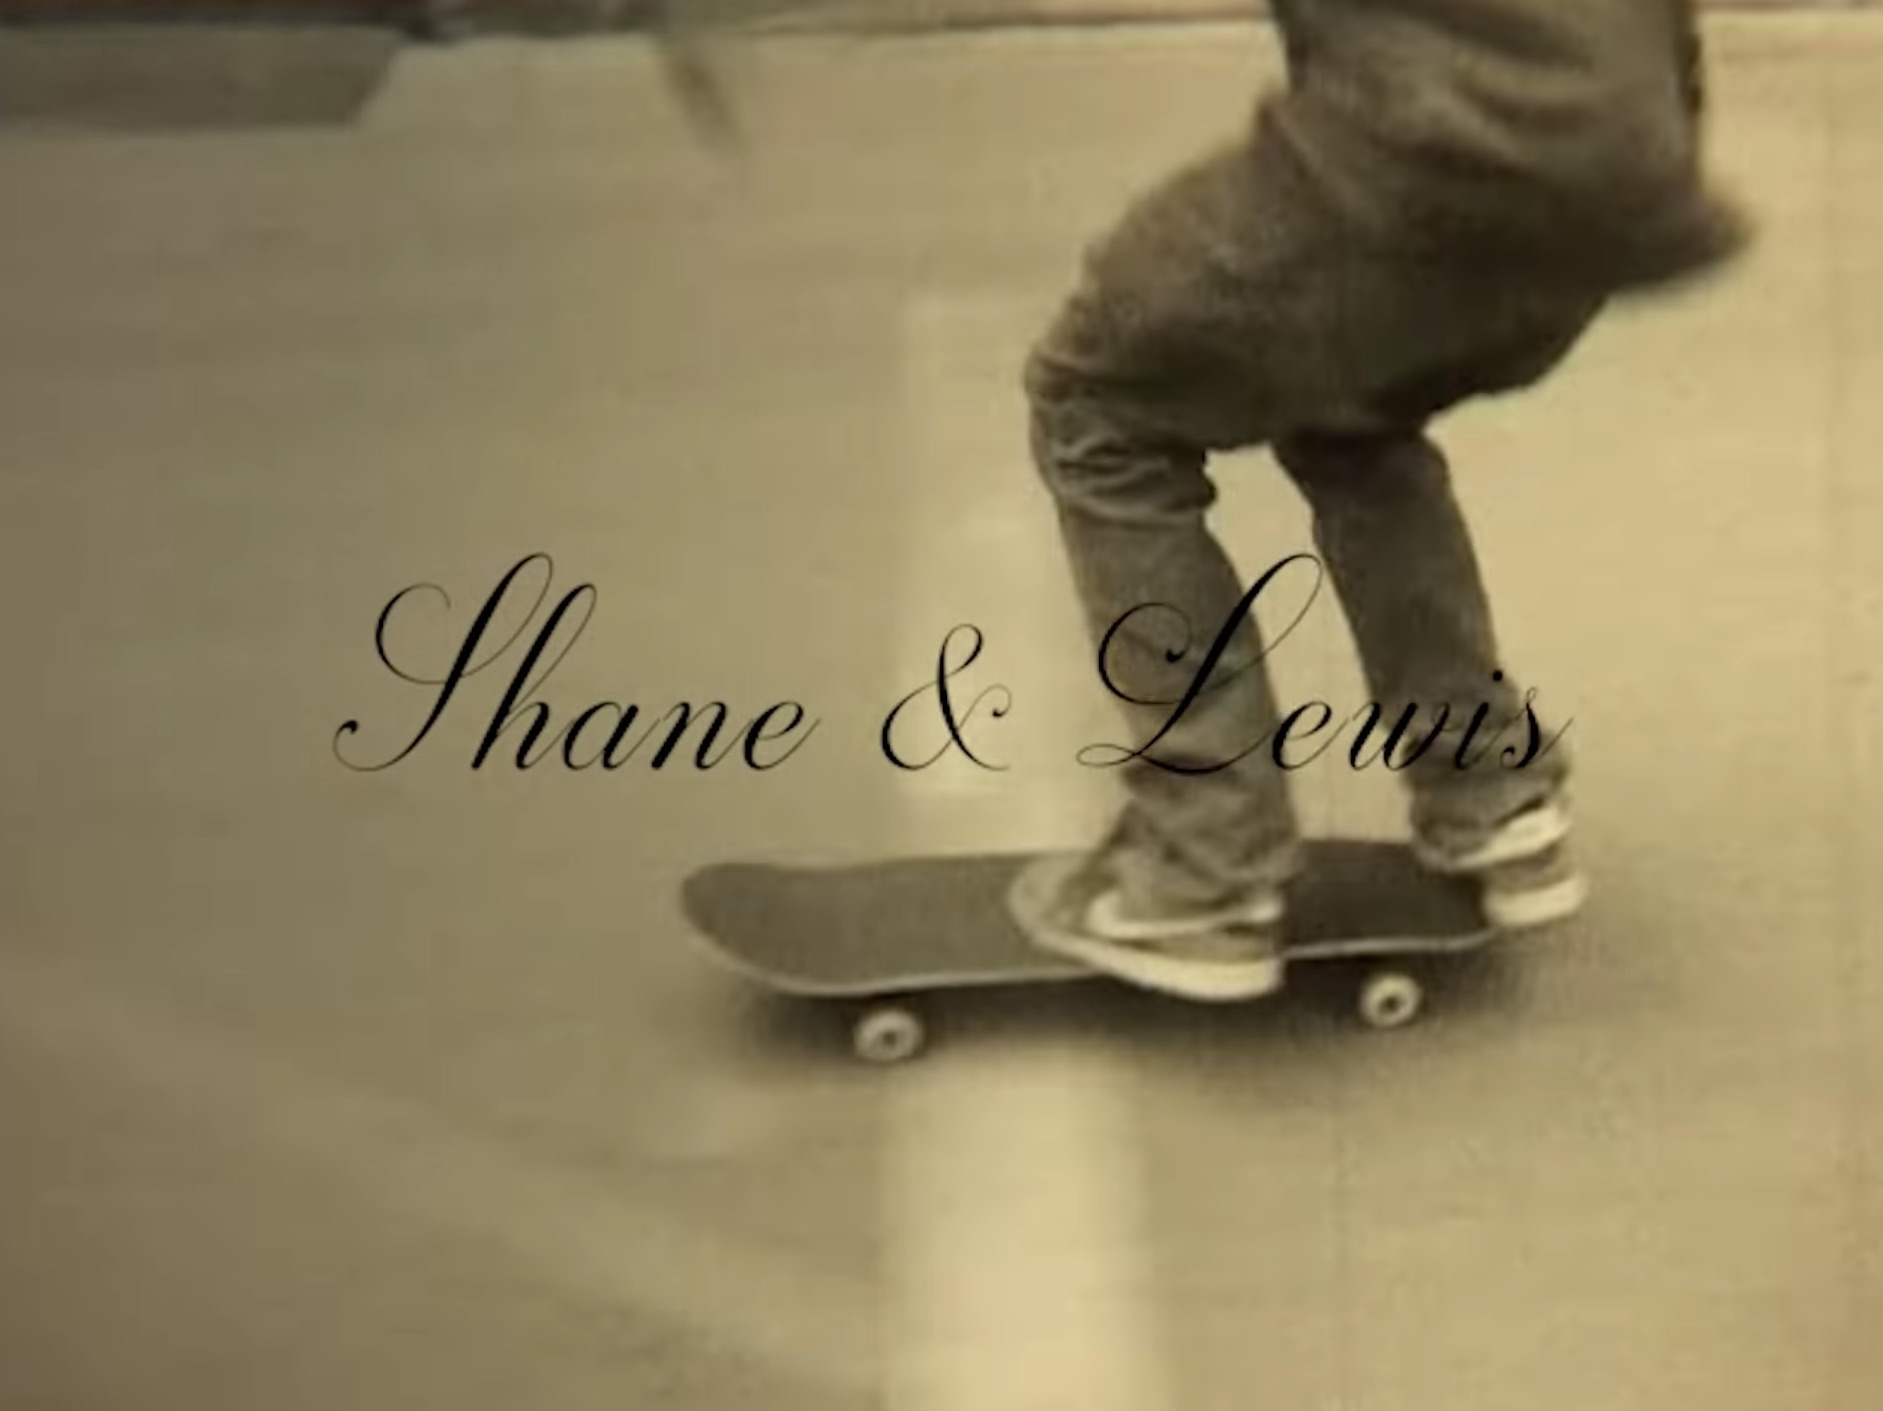 Shane & Lewis cover